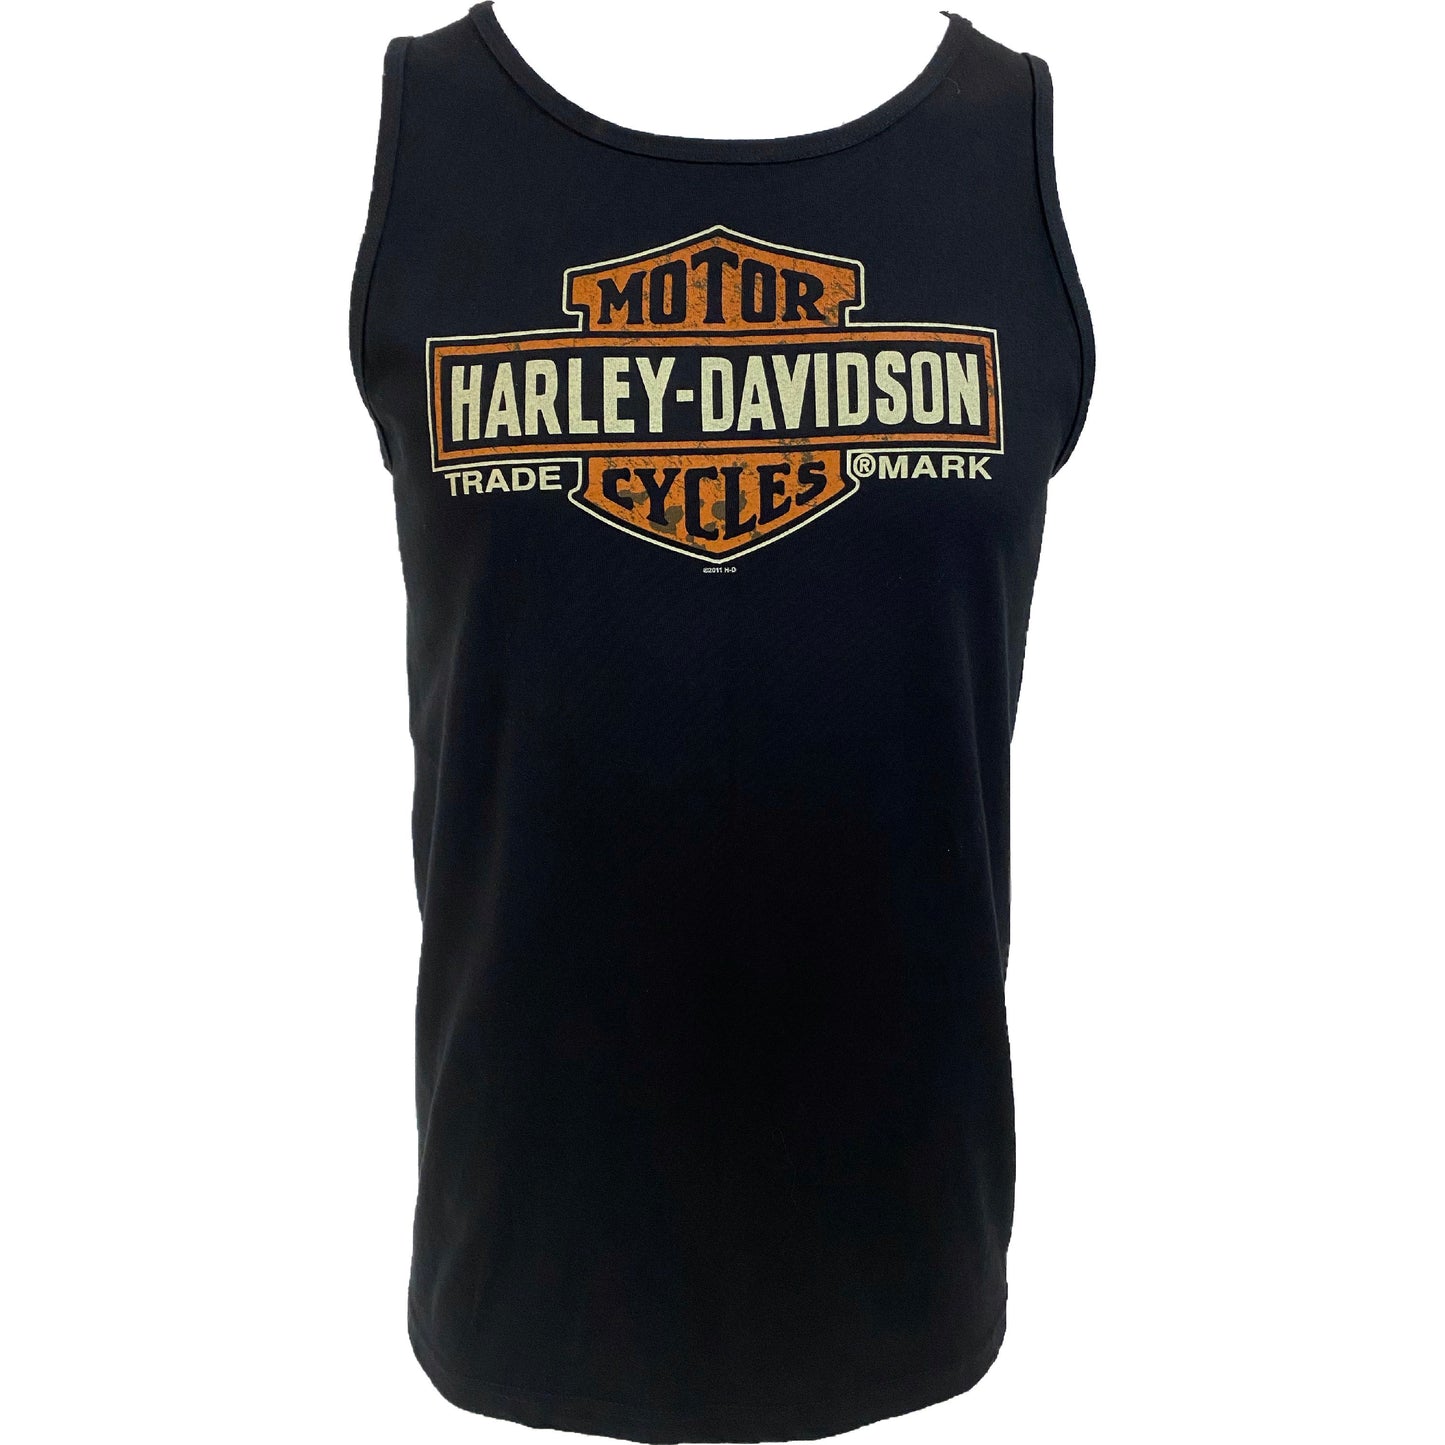 Vintage Deadstock Harley Davidson Texas Tank Top